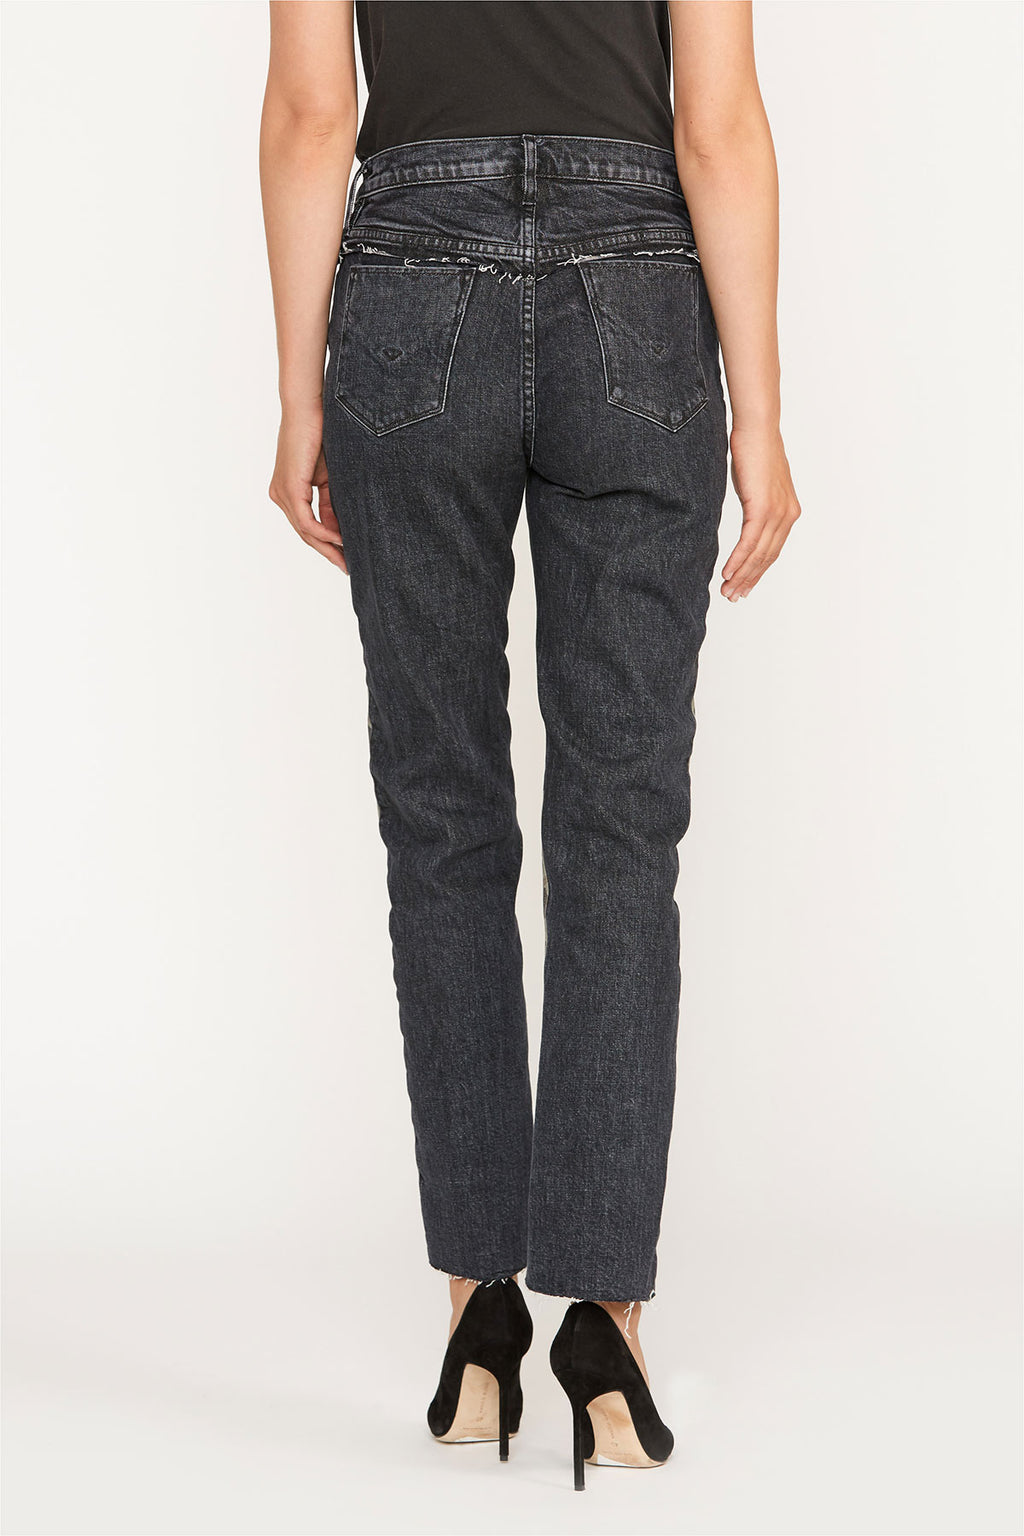 Shop Women's Denim Straight at Hudson Jeans | Hudson Jeans